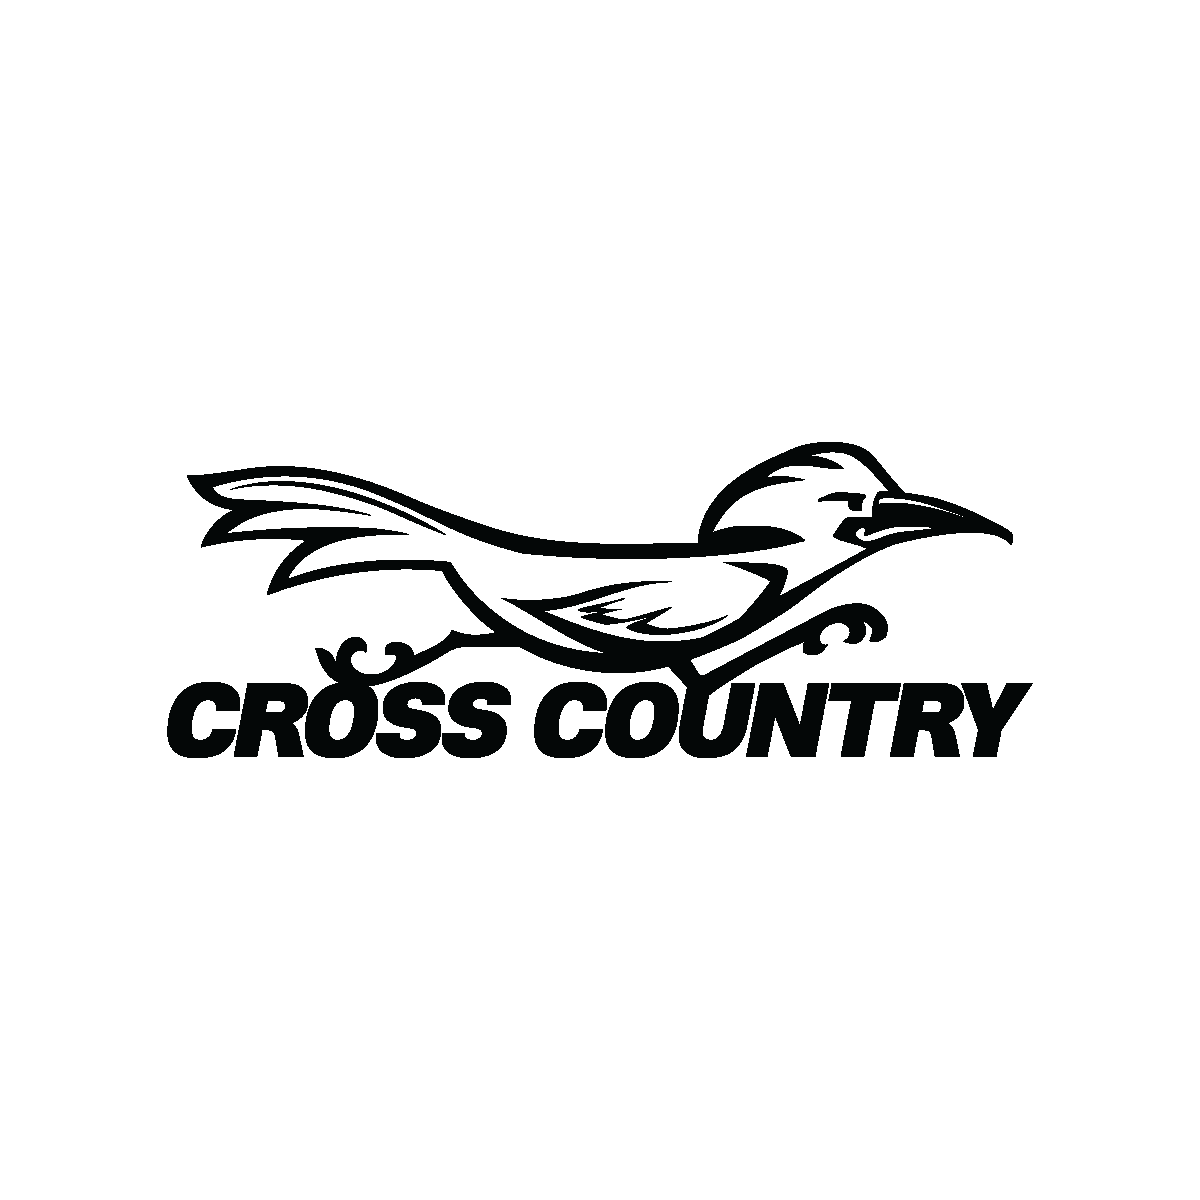 Cross Country mascot - black